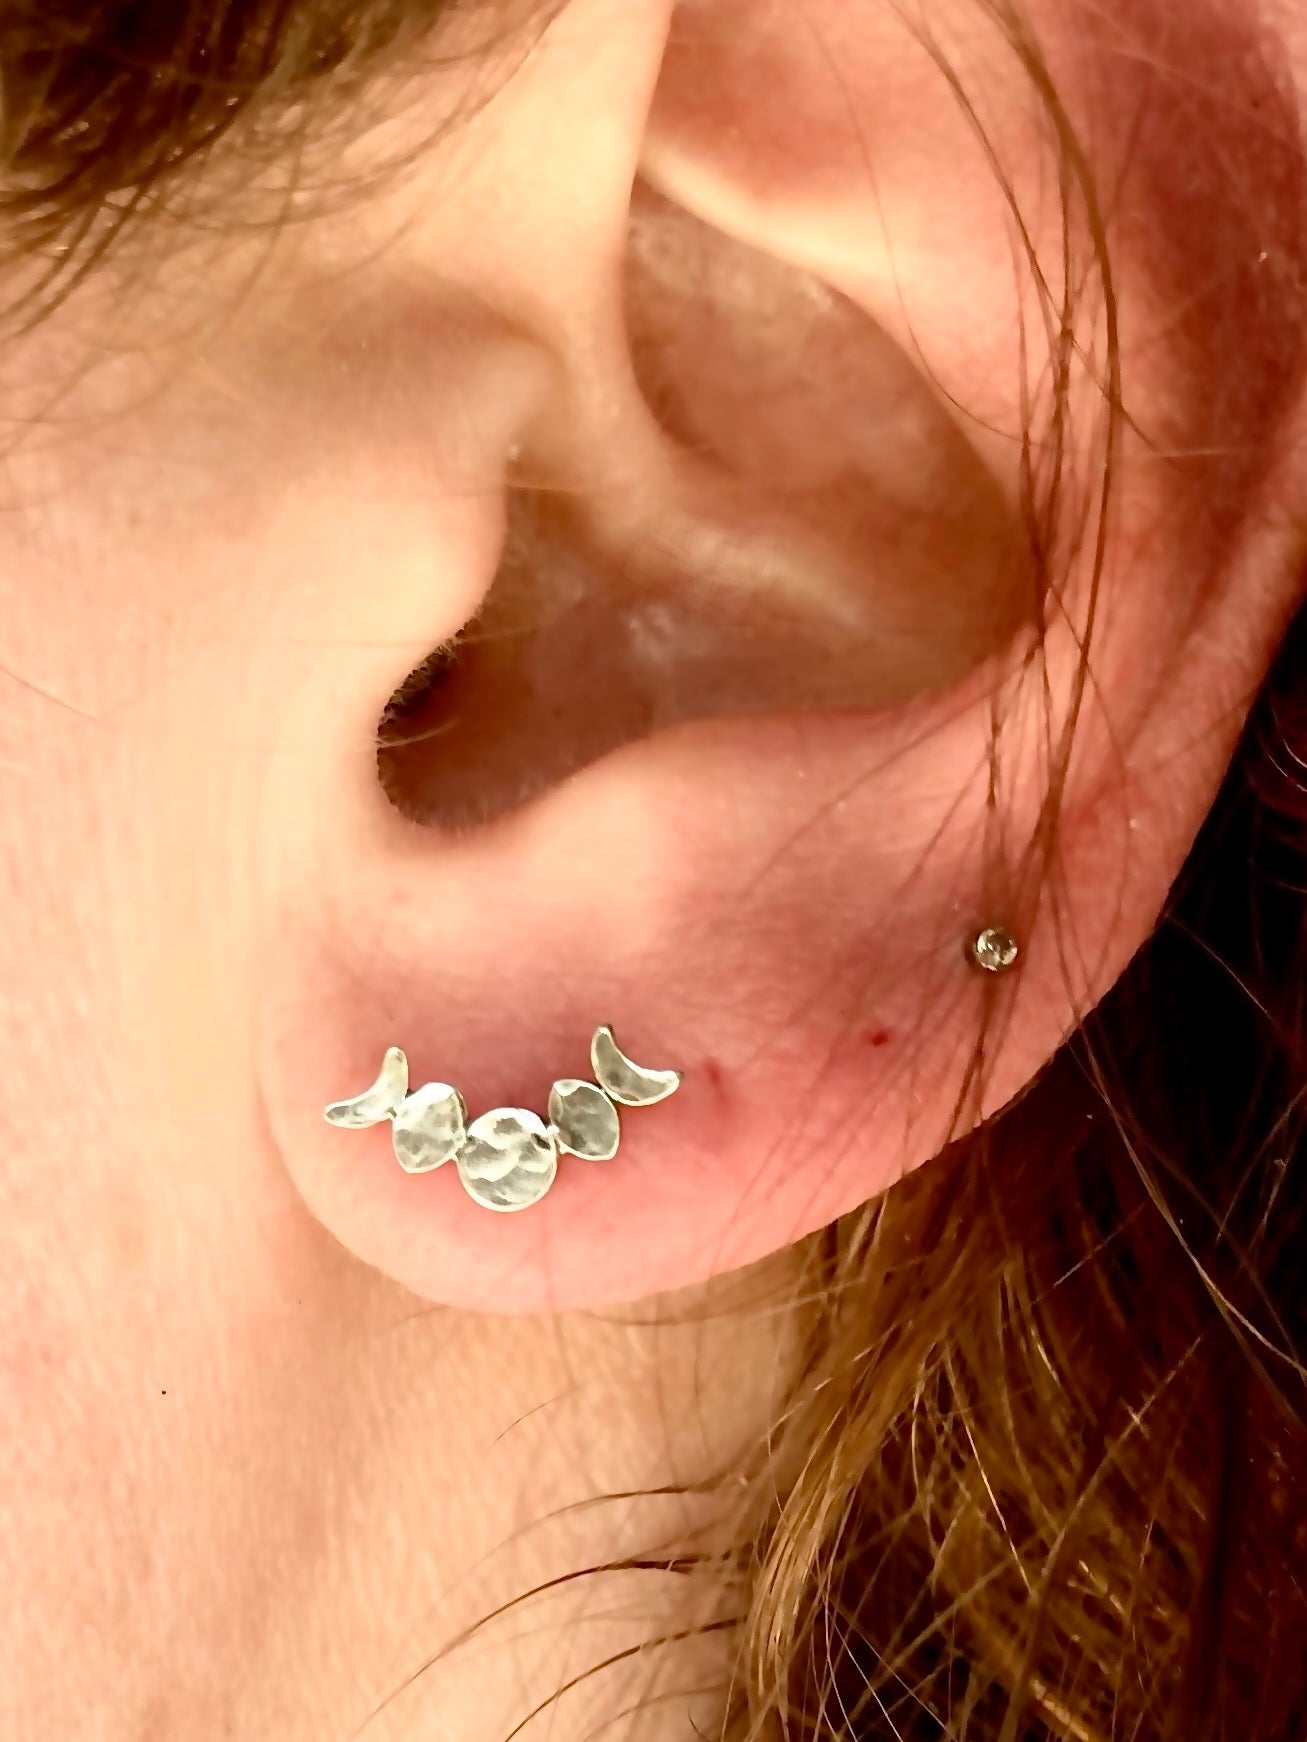 Moon Phase Stud Earrings in Sterling Silver